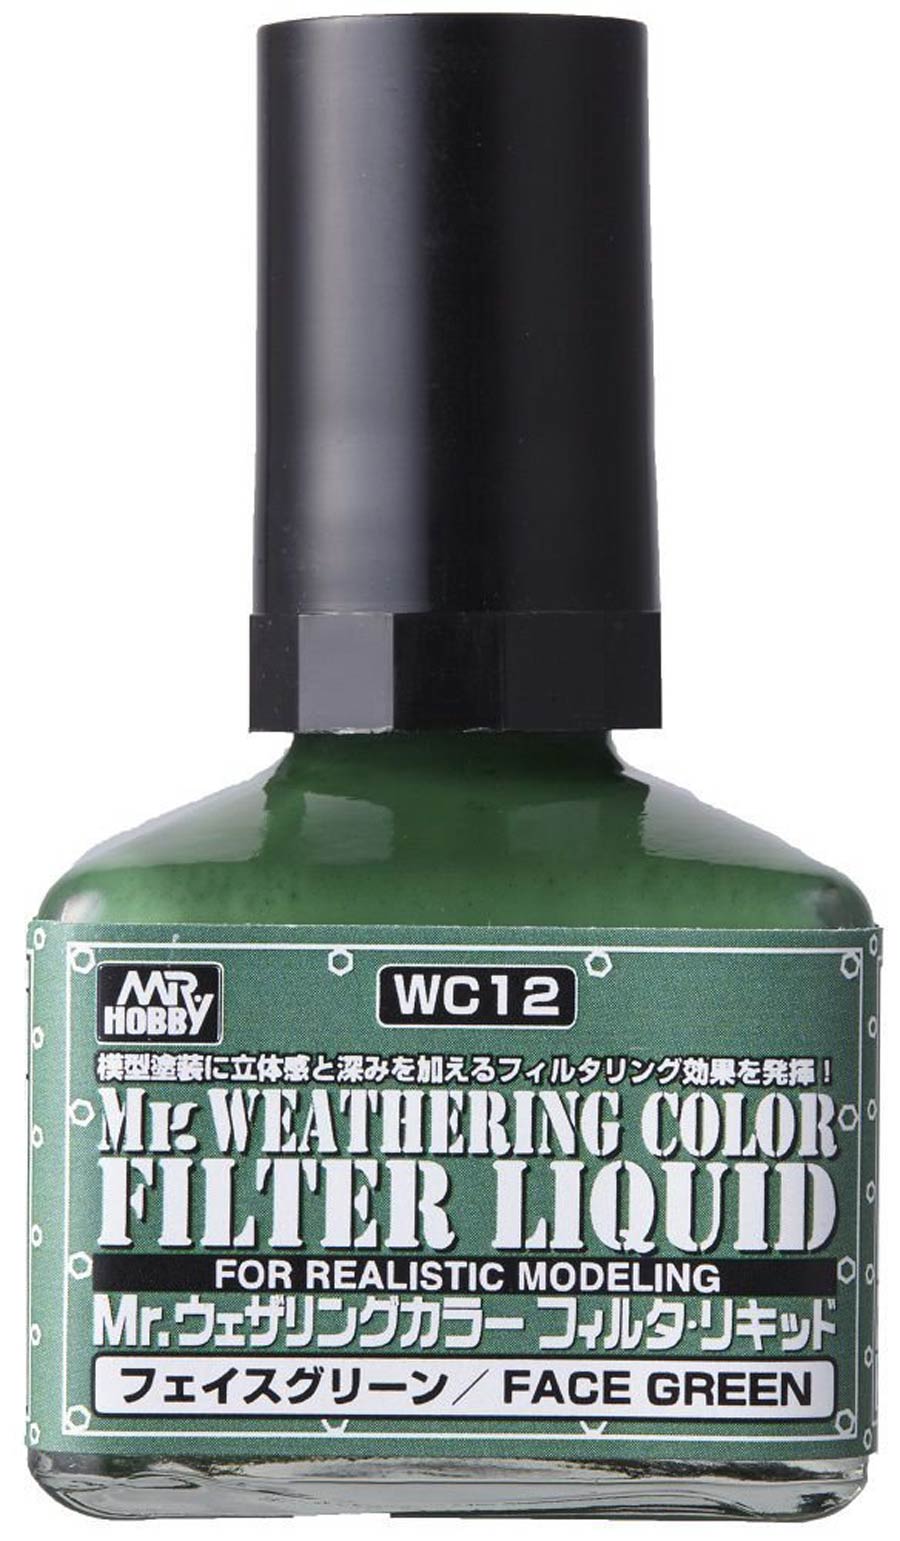 Mr. Weathering Color Paint - WC12 Filter Liquid Face Green Bottle